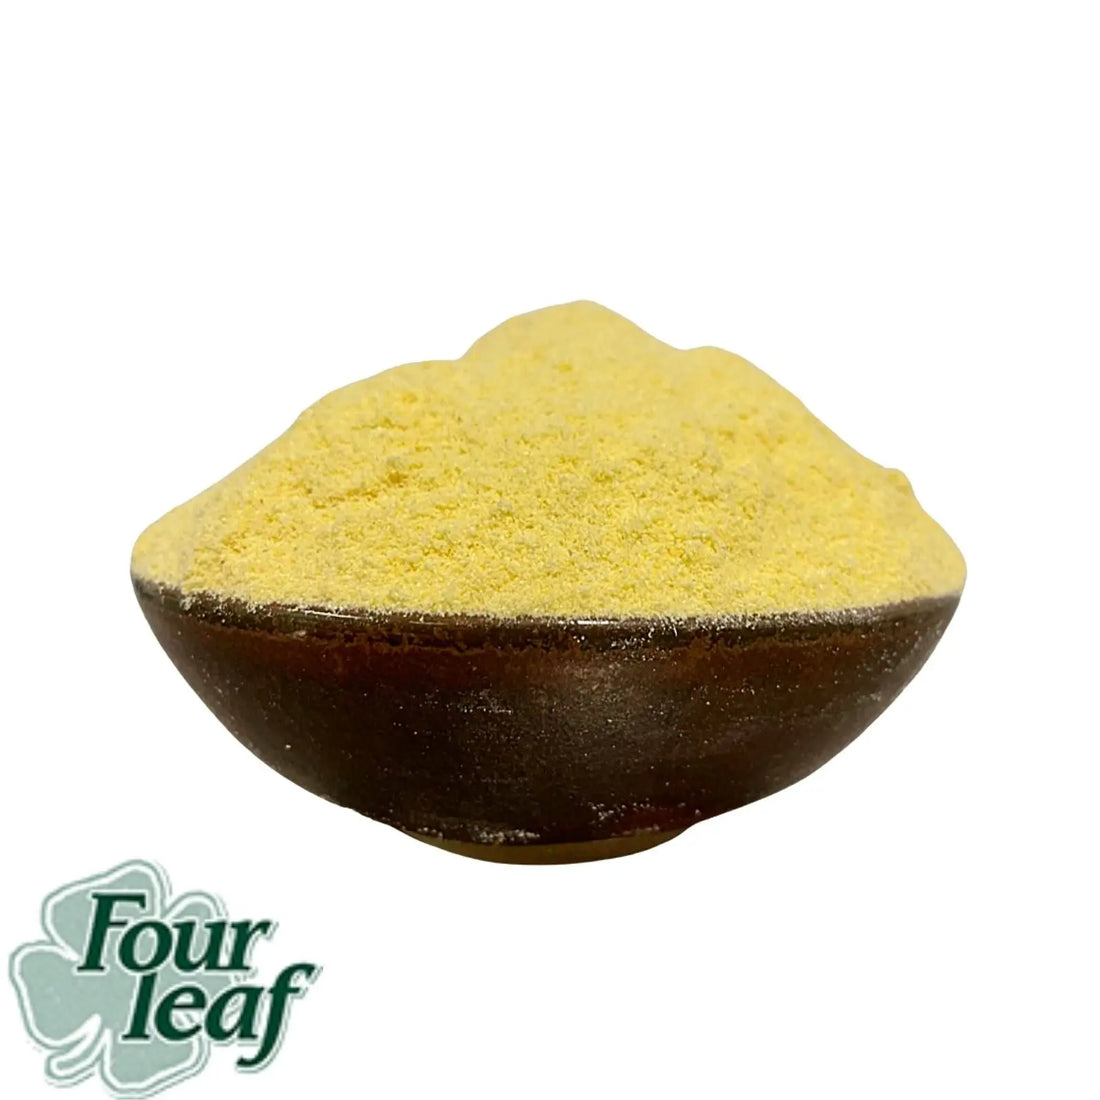 Polenta Organic 5kg-Flour & Baking-Four Leaf Milling-Sovereign Foods-Australian Grown-Organic-Bulk Foods